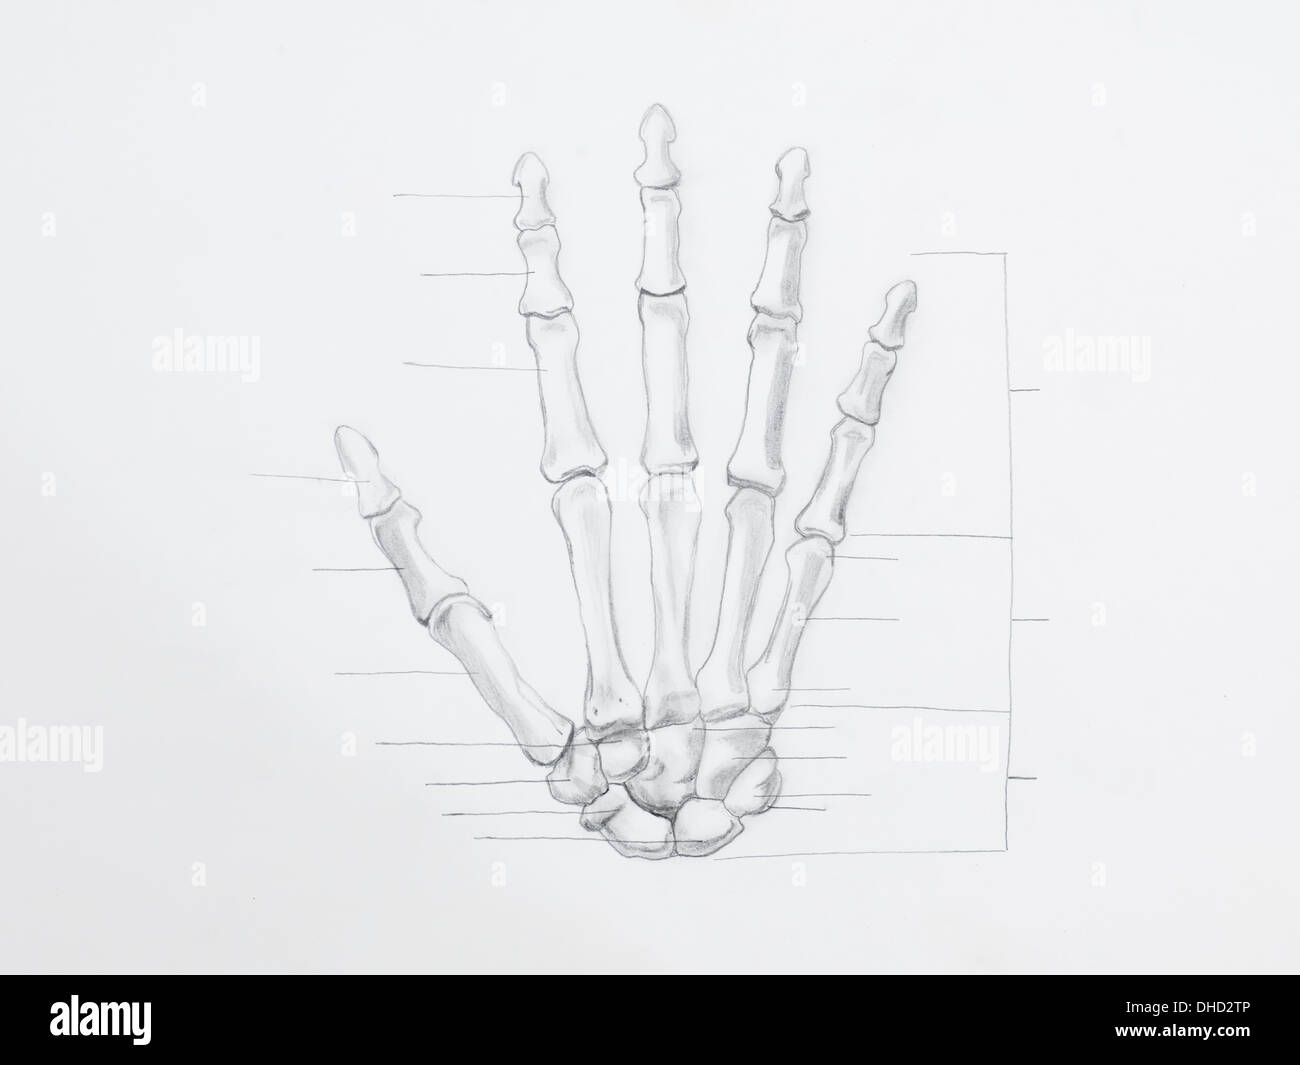 How to Draw Skeleton Hands  Anatomical Hand Bones Sketch